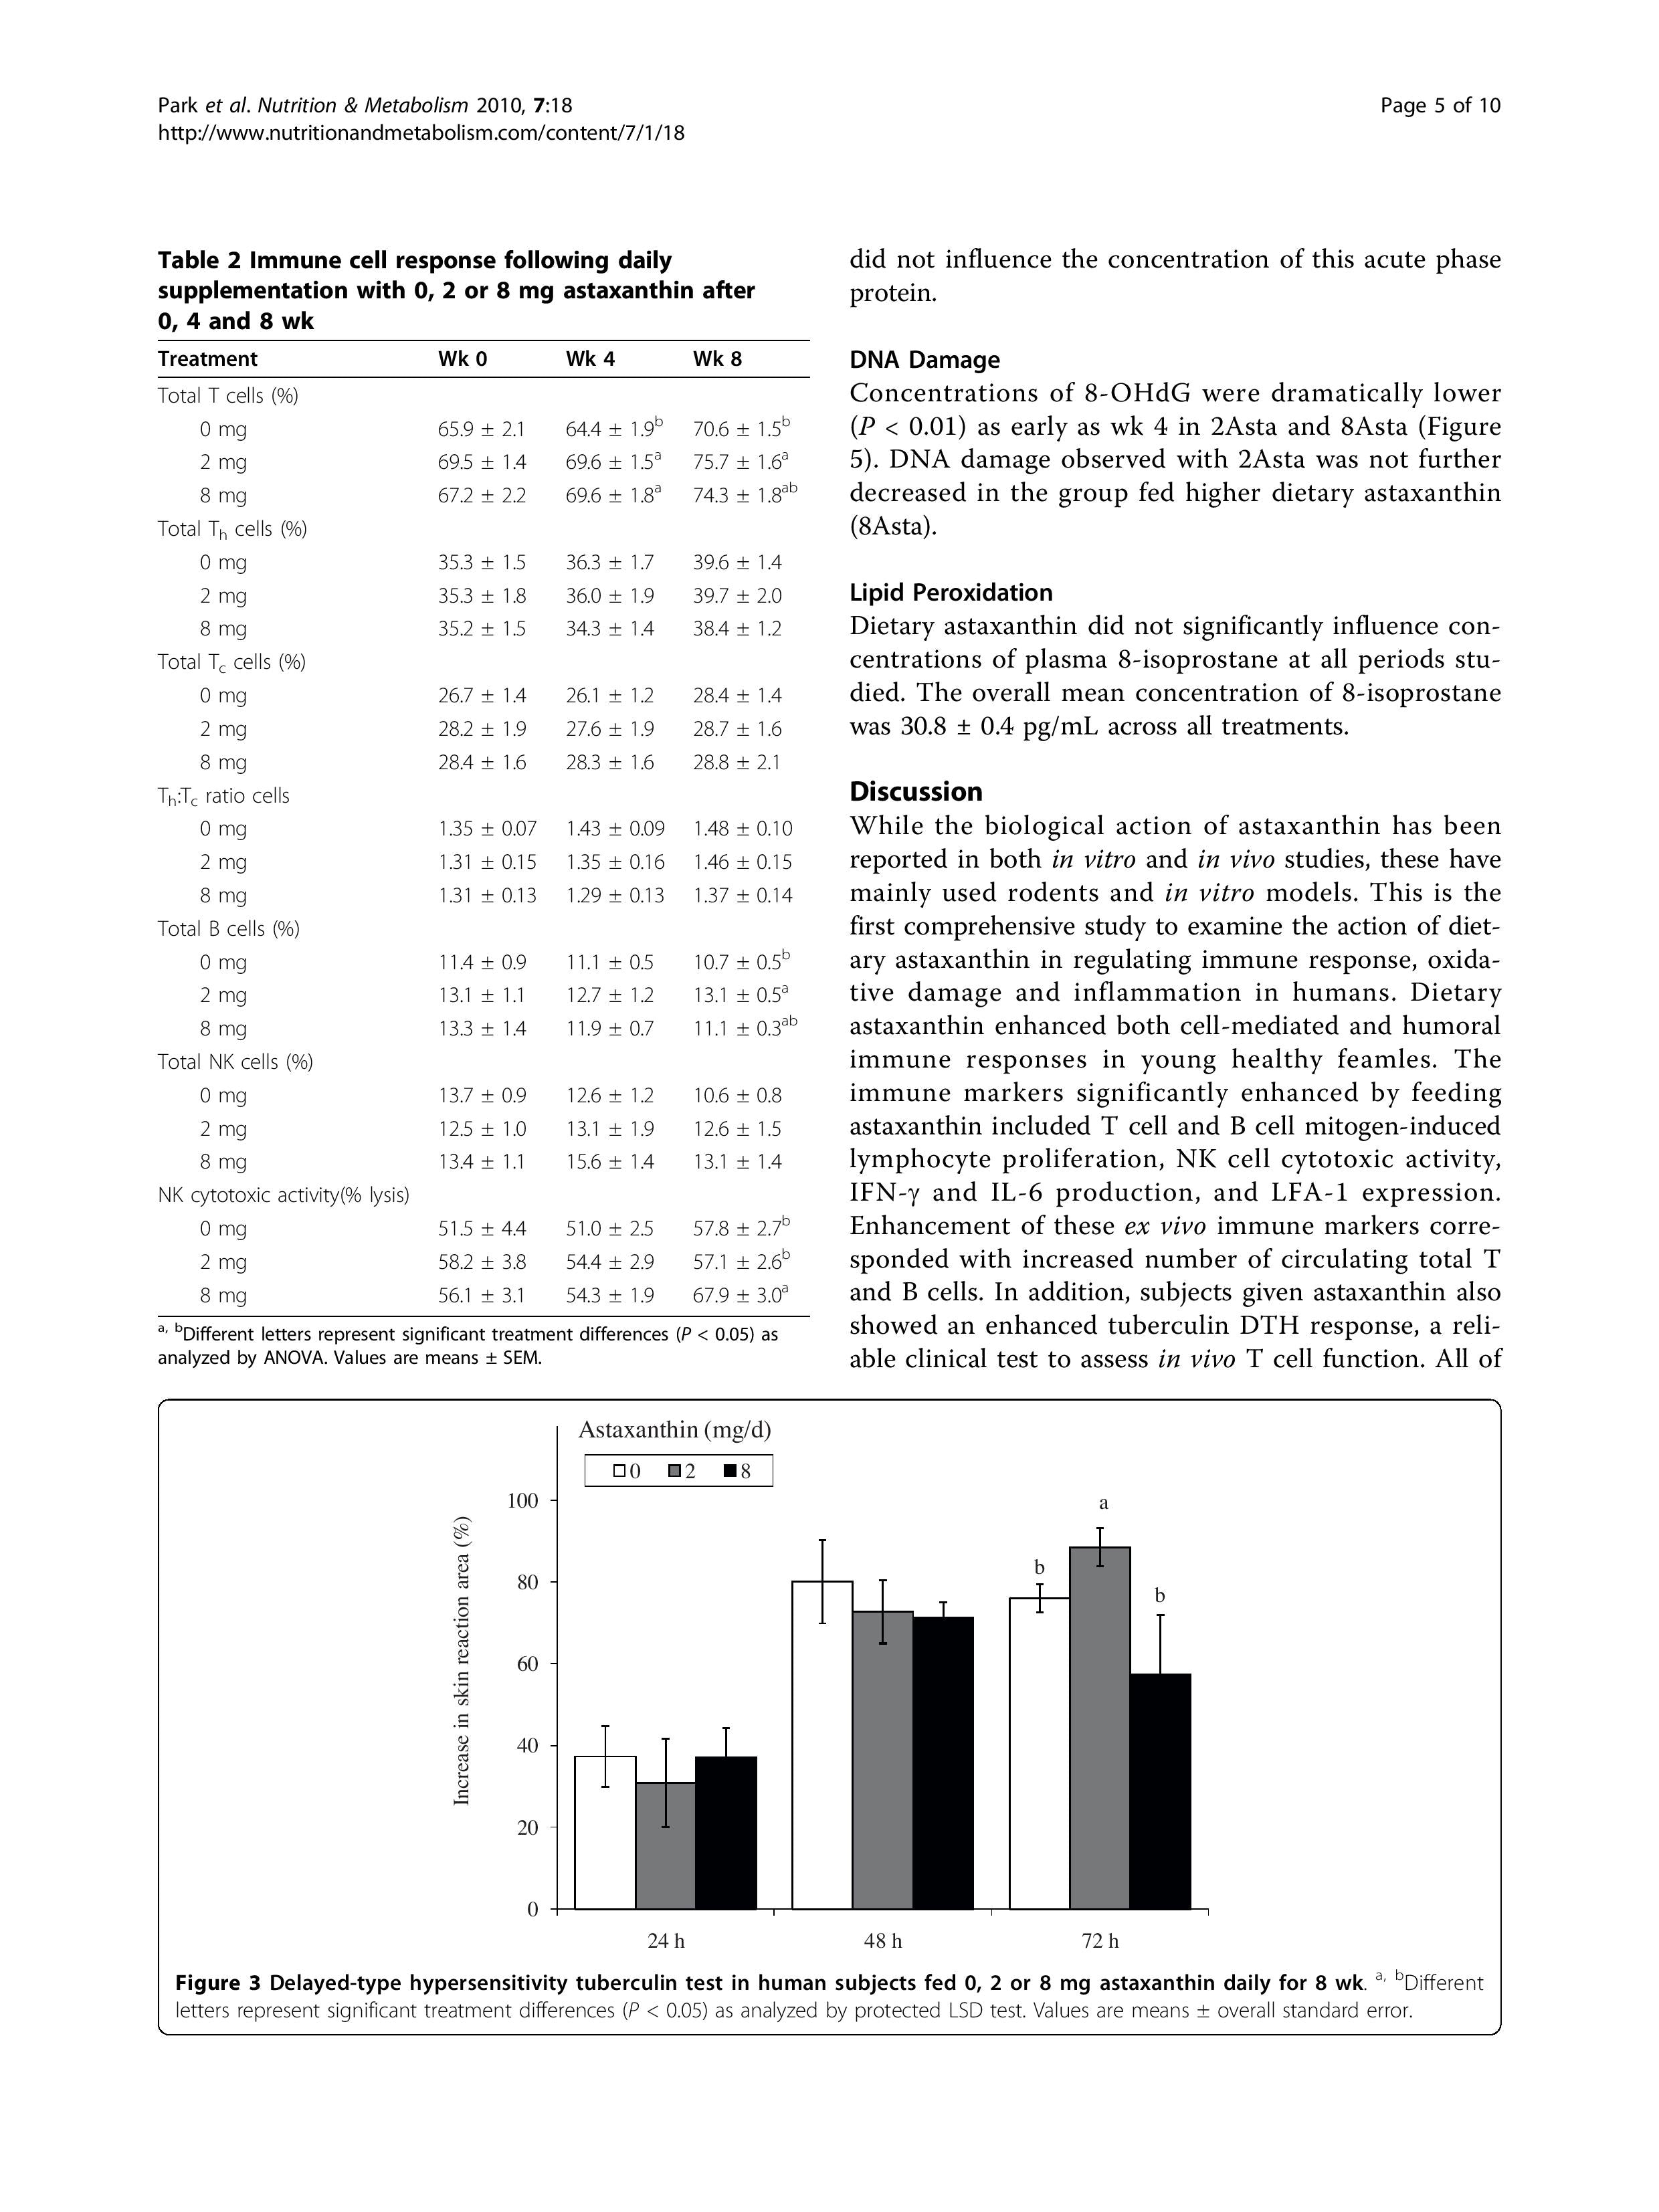 AX Enhance Immune Response-Park2010-page-005